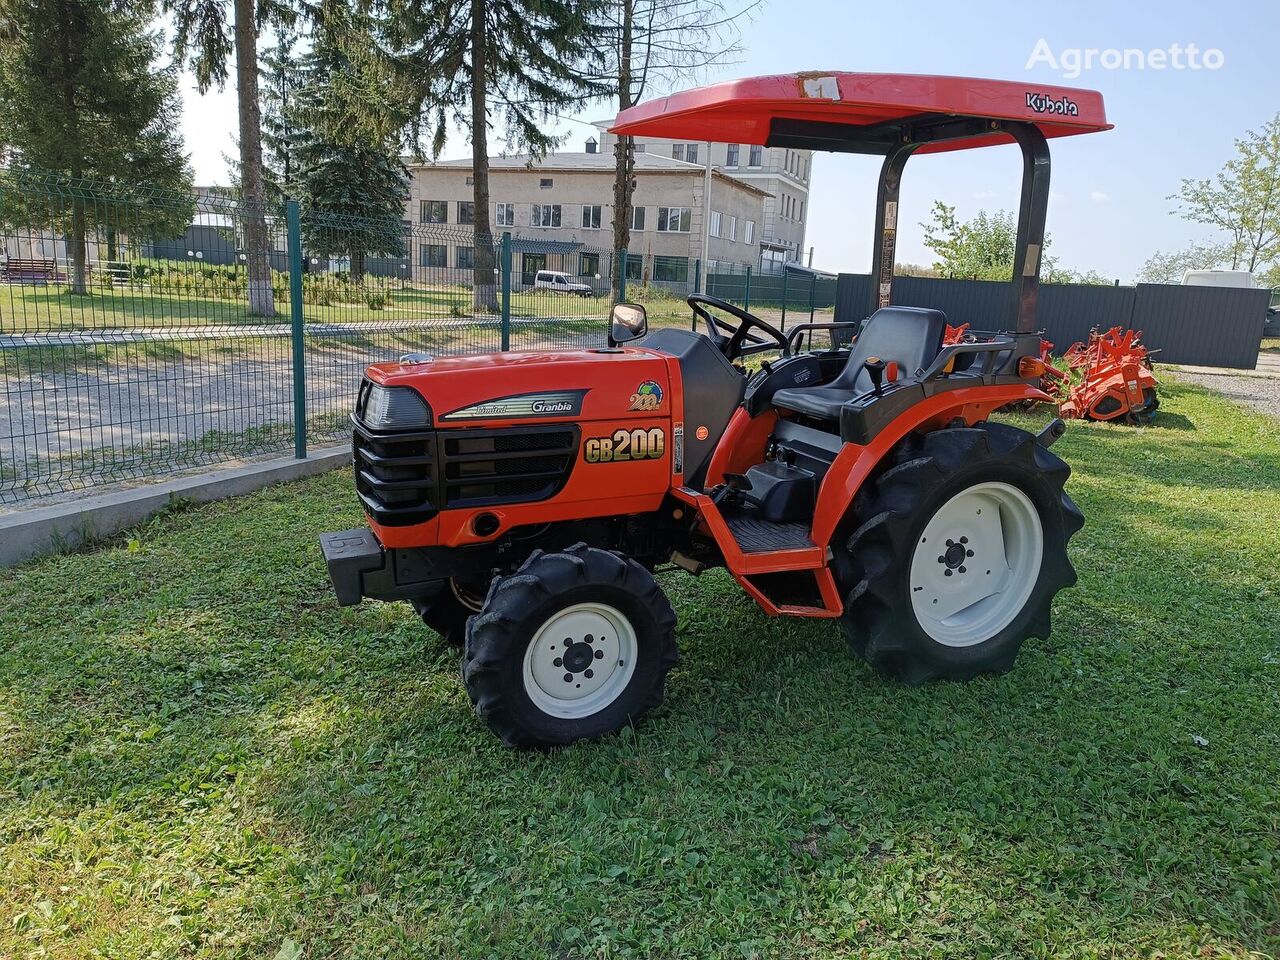 Kubota GB 200 mini tractor